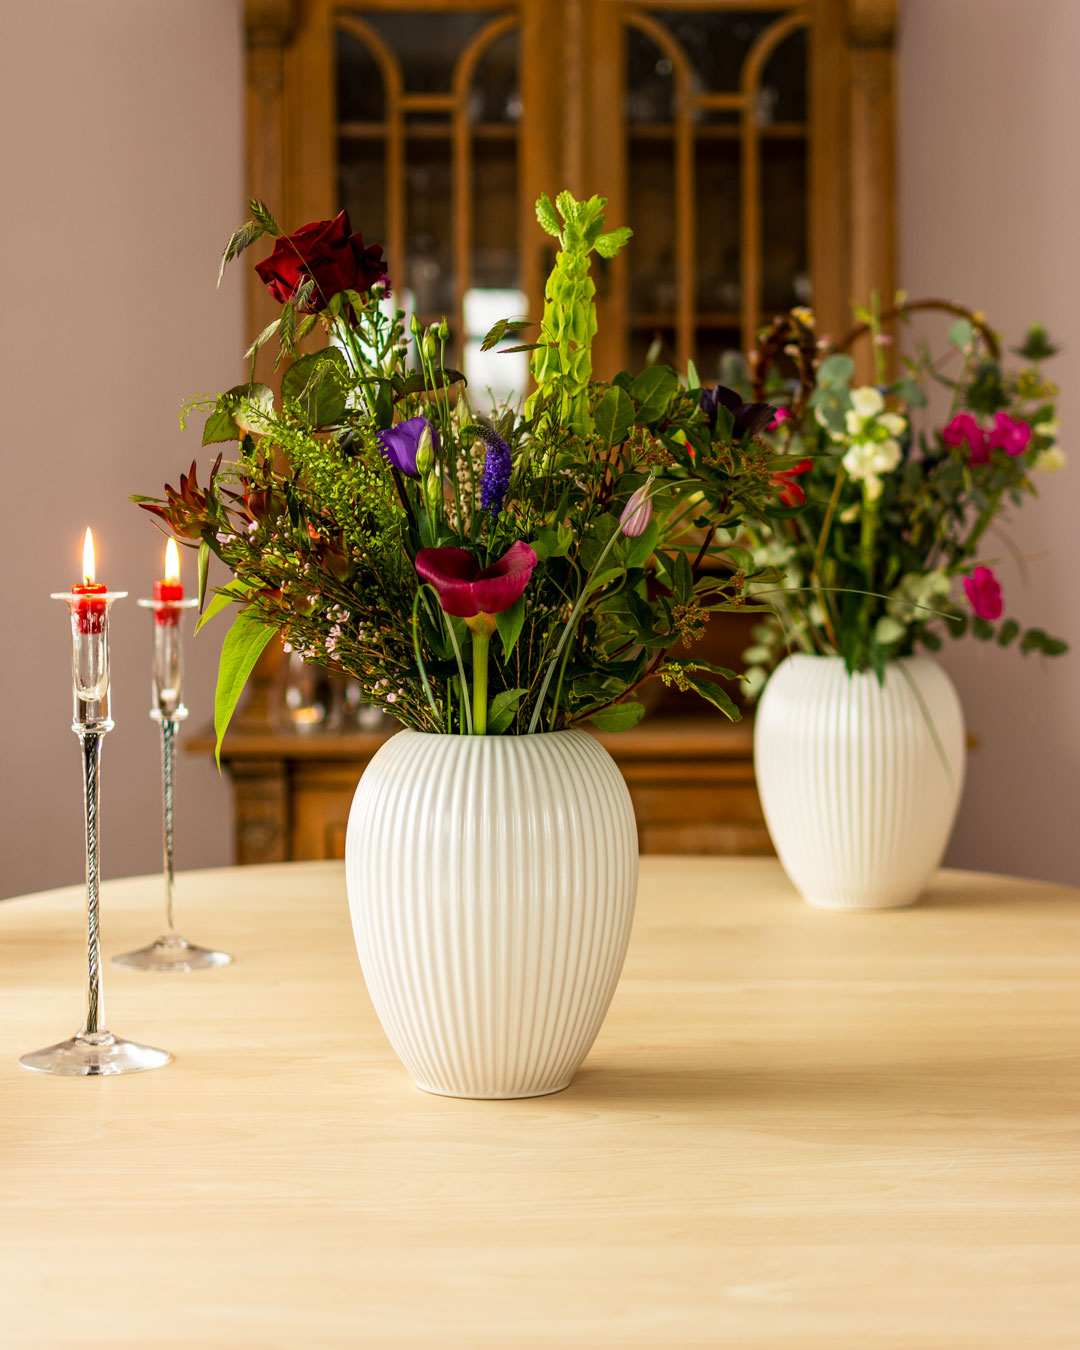 Hvide vaser med vilde blomster på spisebord Model 4767 fra Michael Andersen Keramik